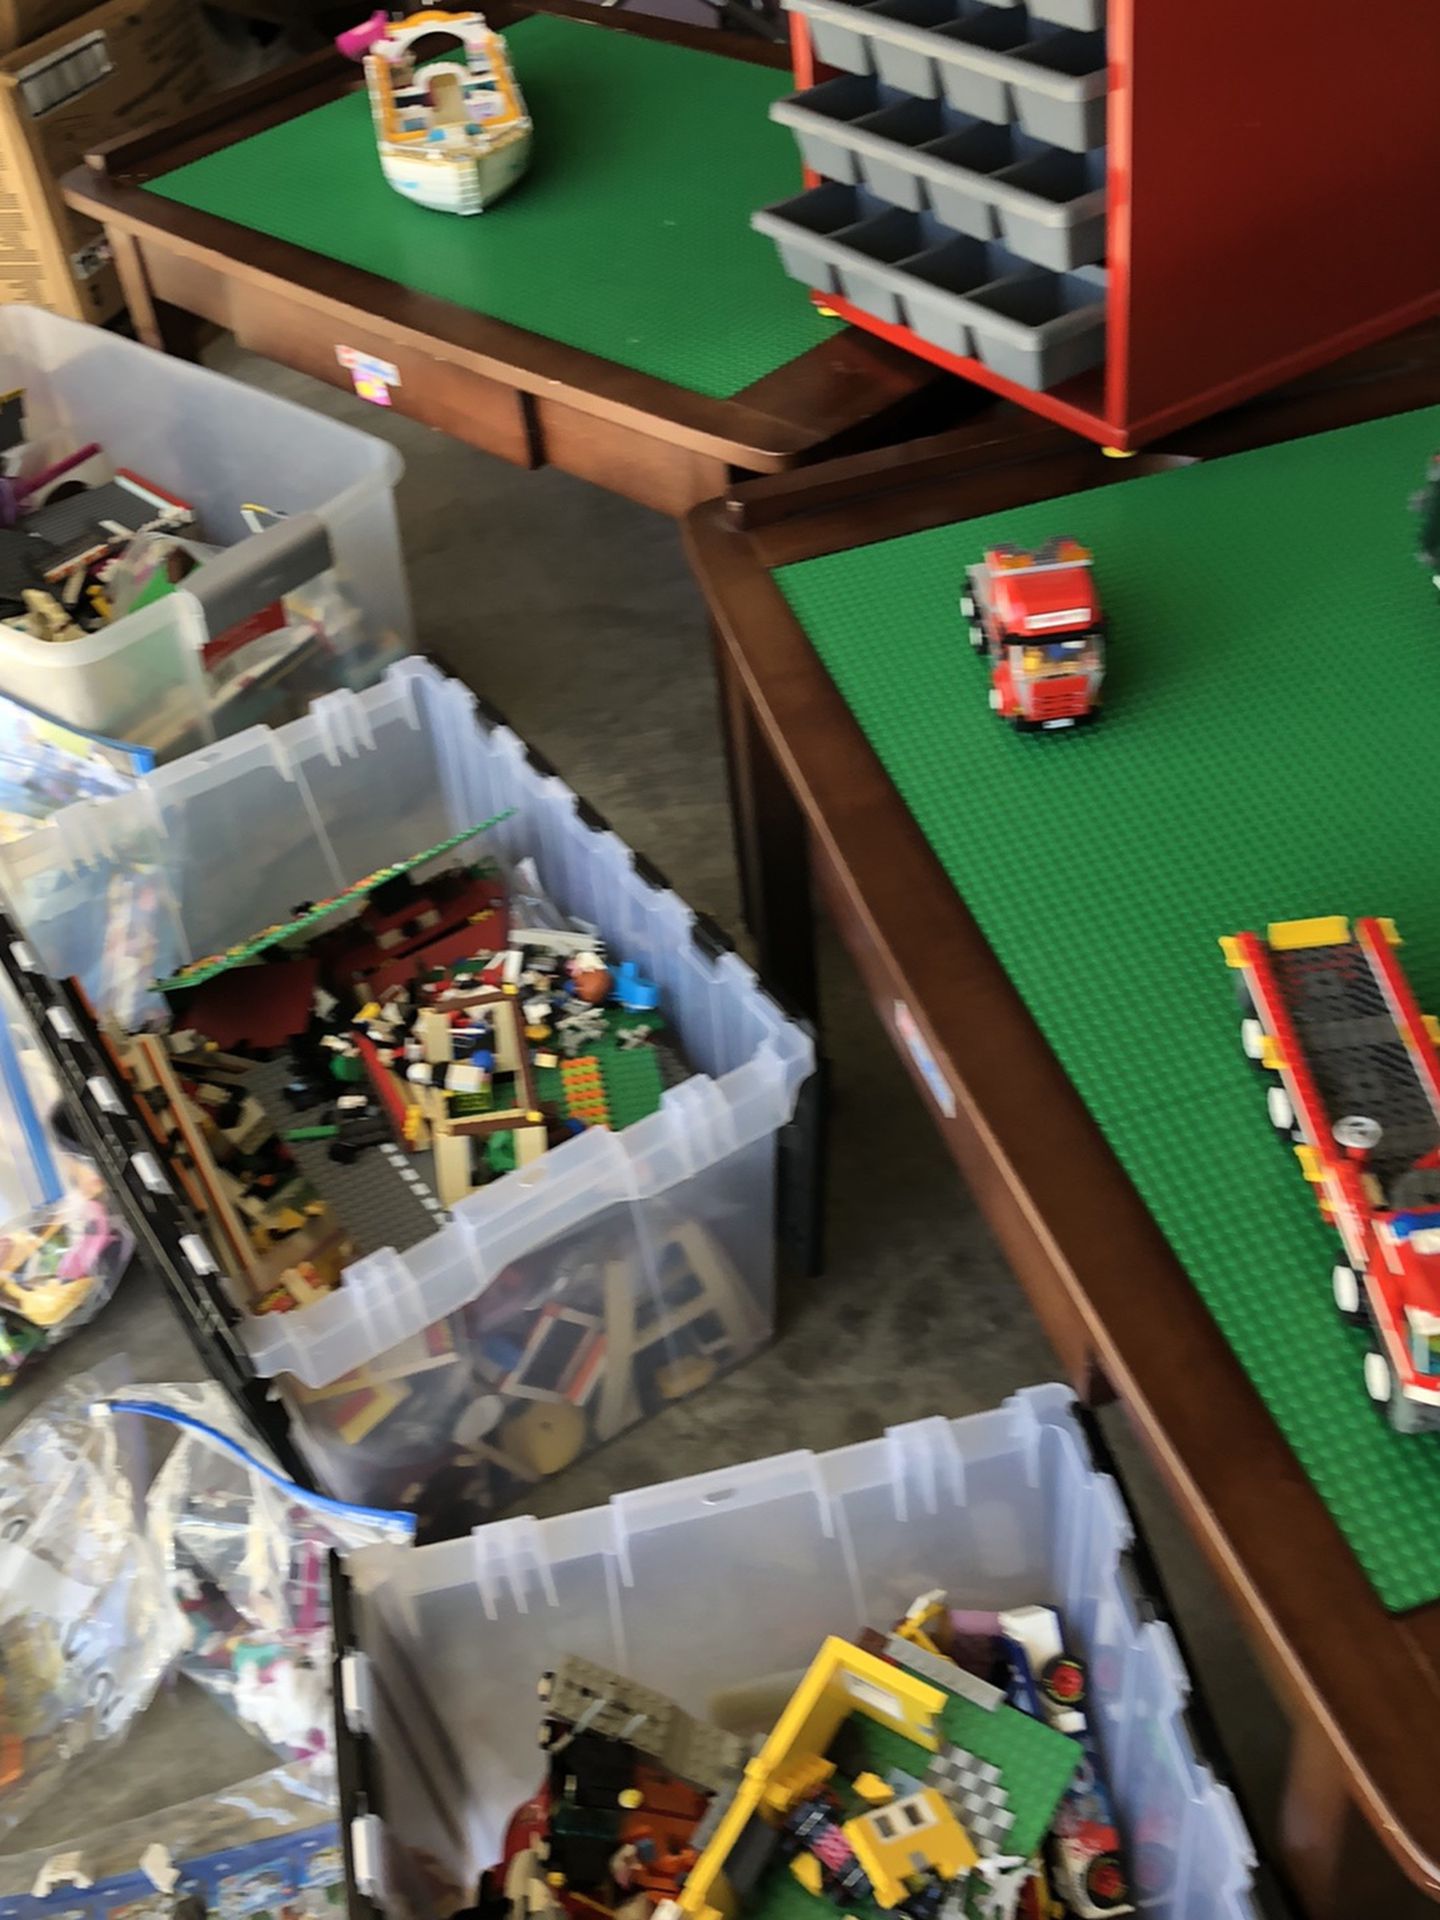 LEGOS, LEGO TABLES, LEGO DRAWERS, BOOKS!